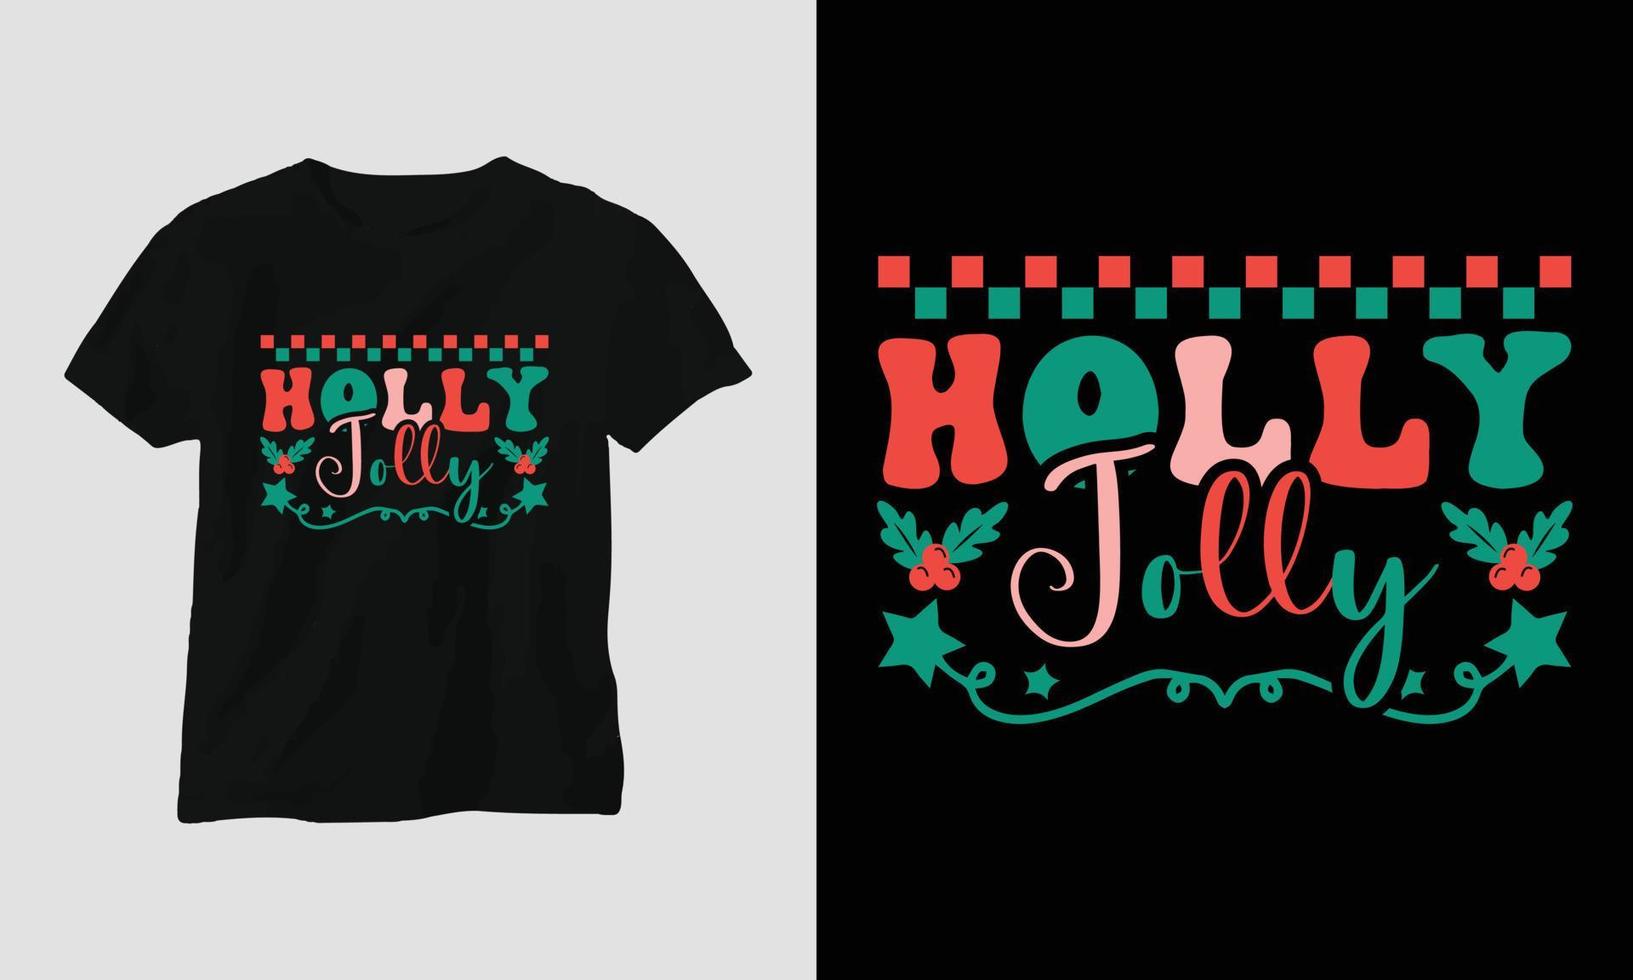 hulst vrolijk - Kerstmis retro groovy t-shirt en kleding ontwerp. vector